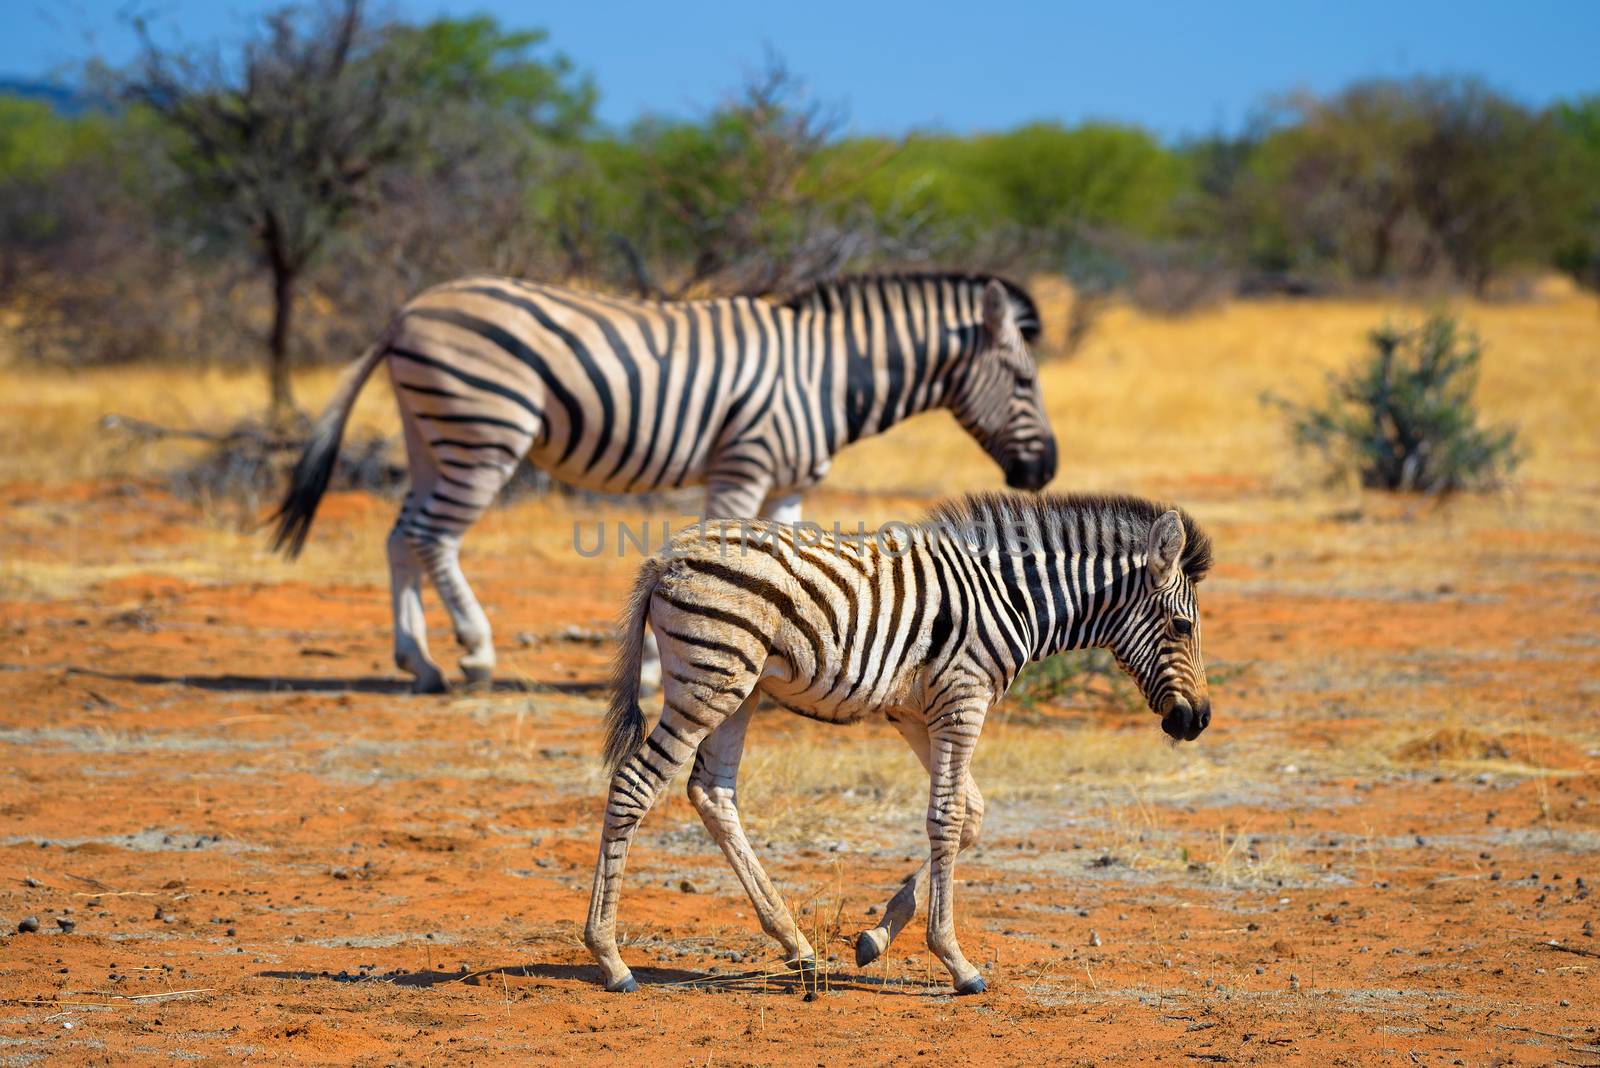 Mother and baby zebra in Etosha National Park, Namibia